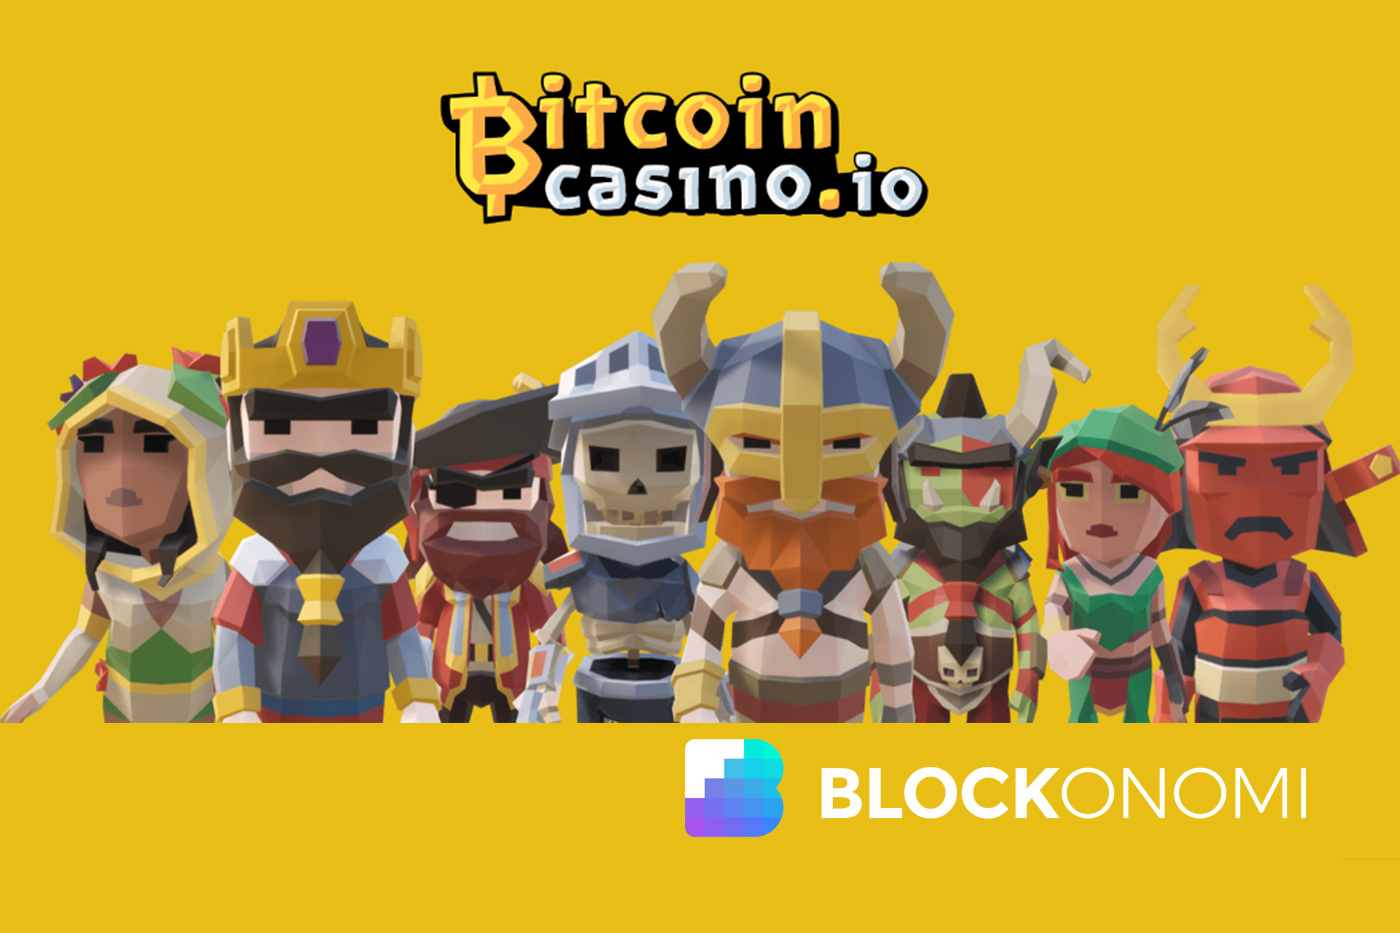 Bitcoin casino free bitcoin slot machine games for fun